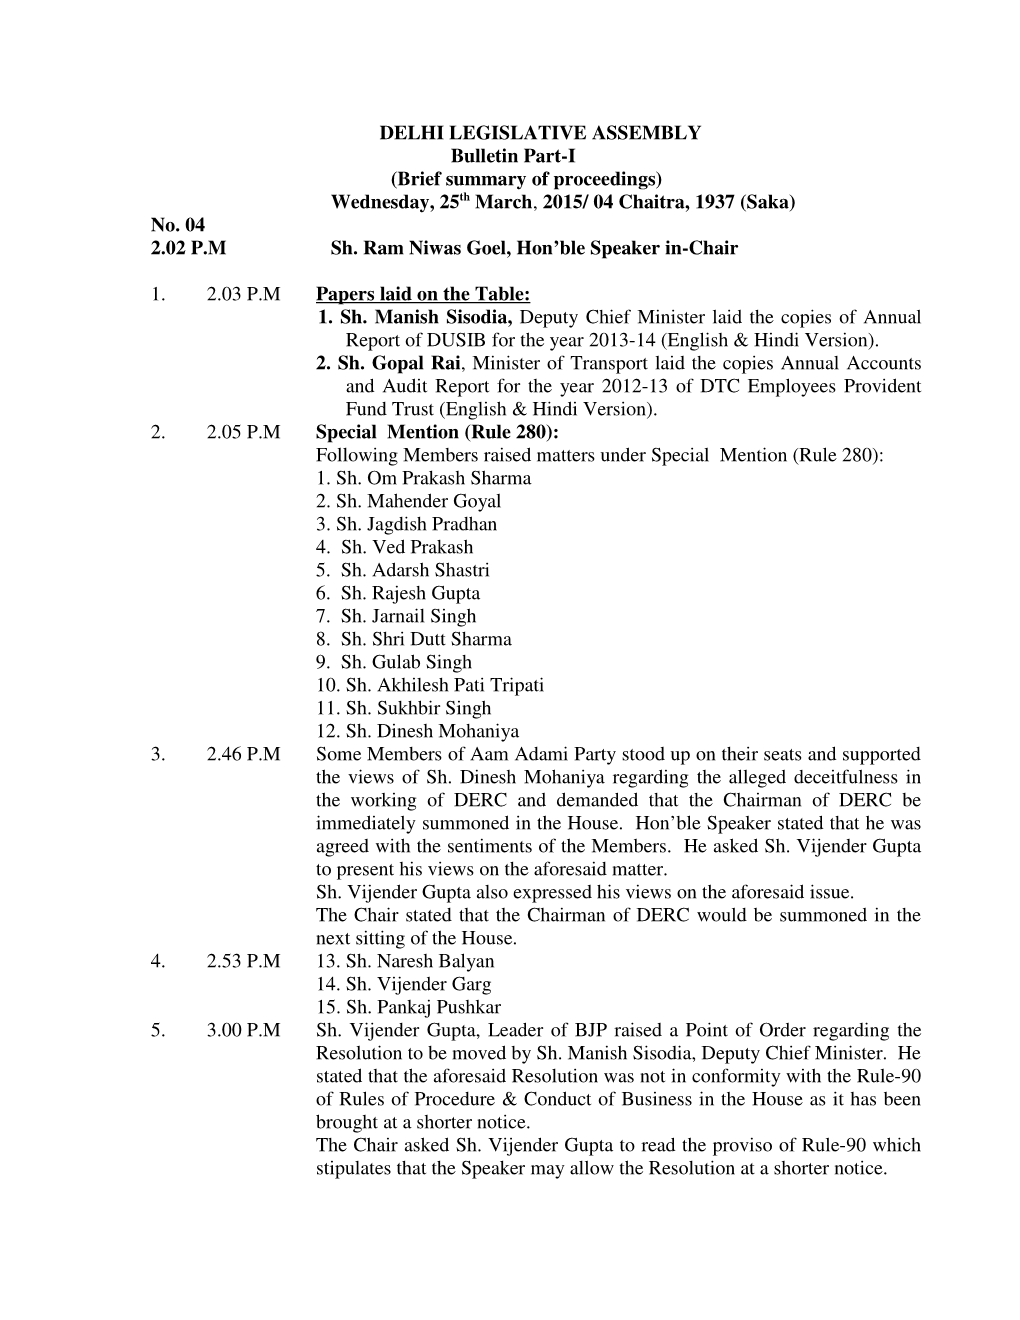 DELHI LEGISLATIVE ASSEMBLY Bulletin Part-I (Brief Summary of Proceedings) Wednesday, 25 Th March , 2015/ 04 Chaitra, 1937 (Saka) No